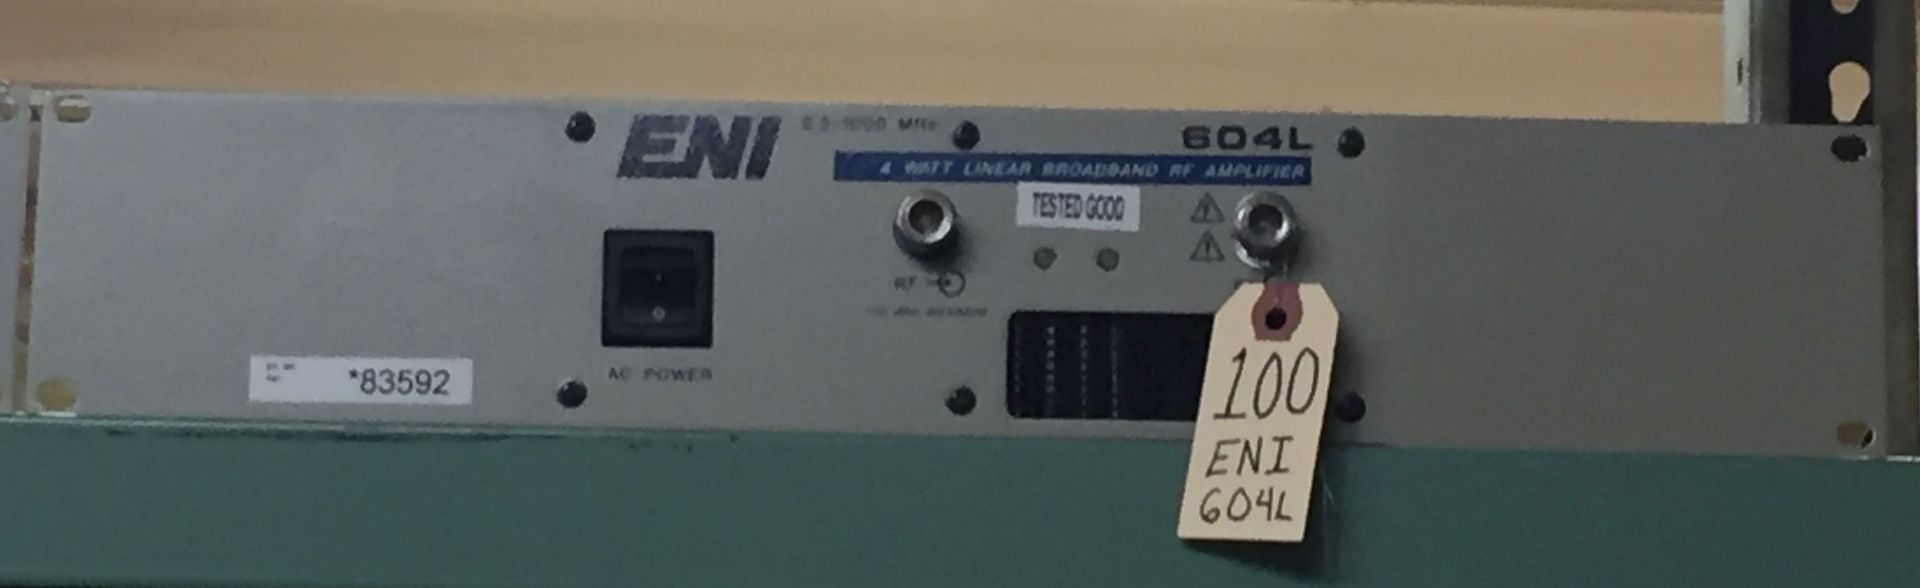 ENI 604L RF Amplifier